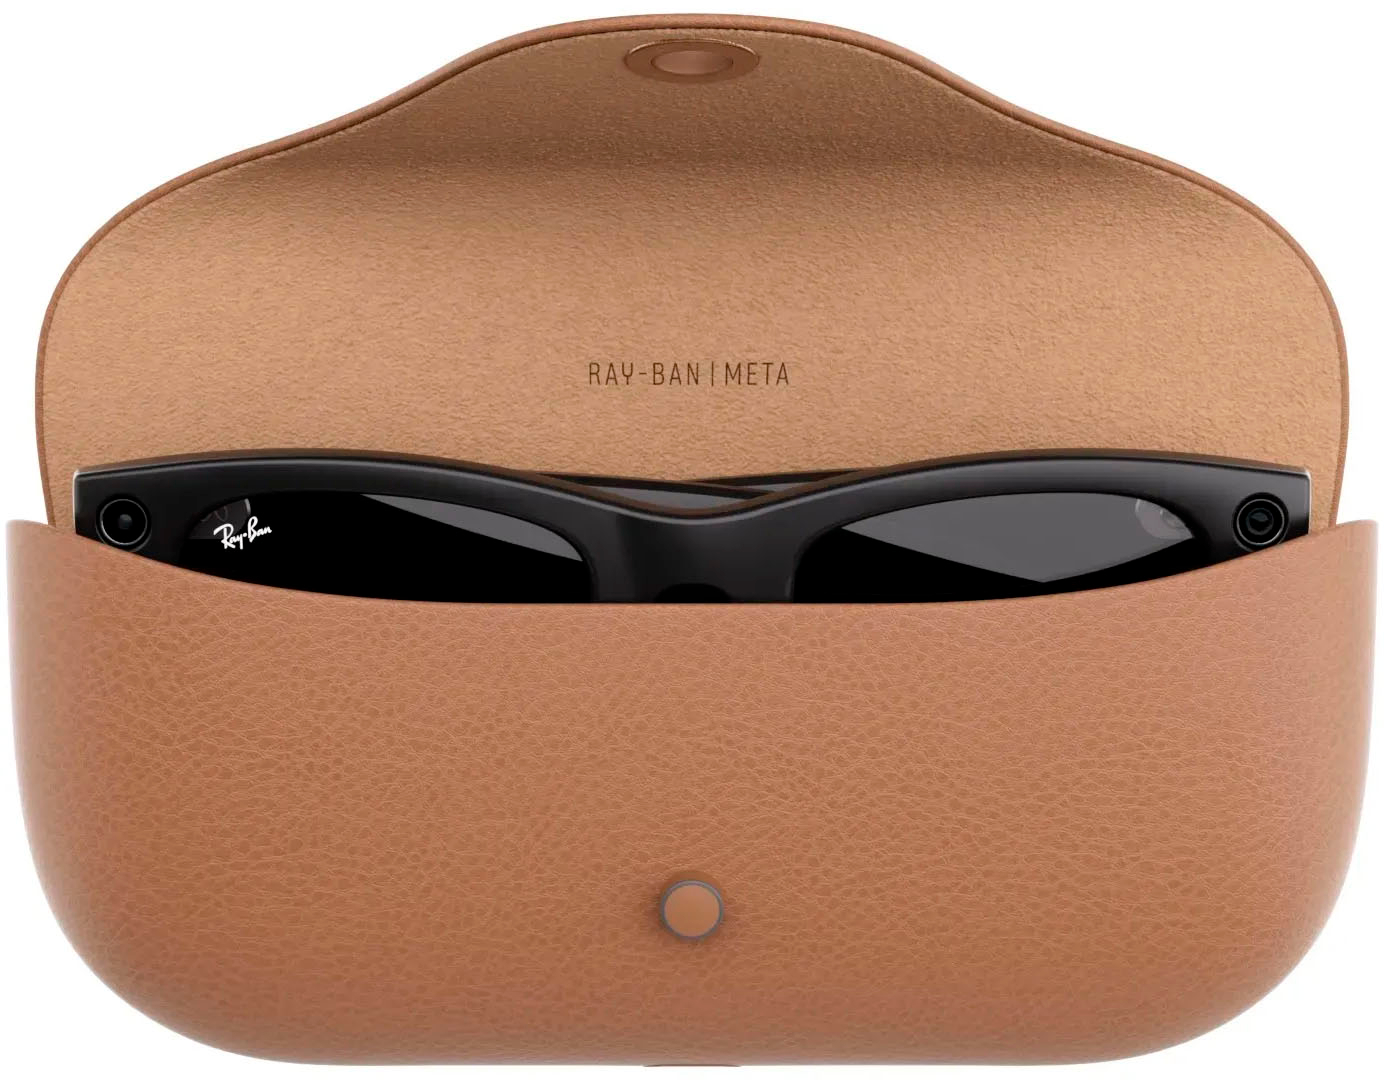 Ray-Ban Meta Smart Glasses: livestreaming, headphone-replacing